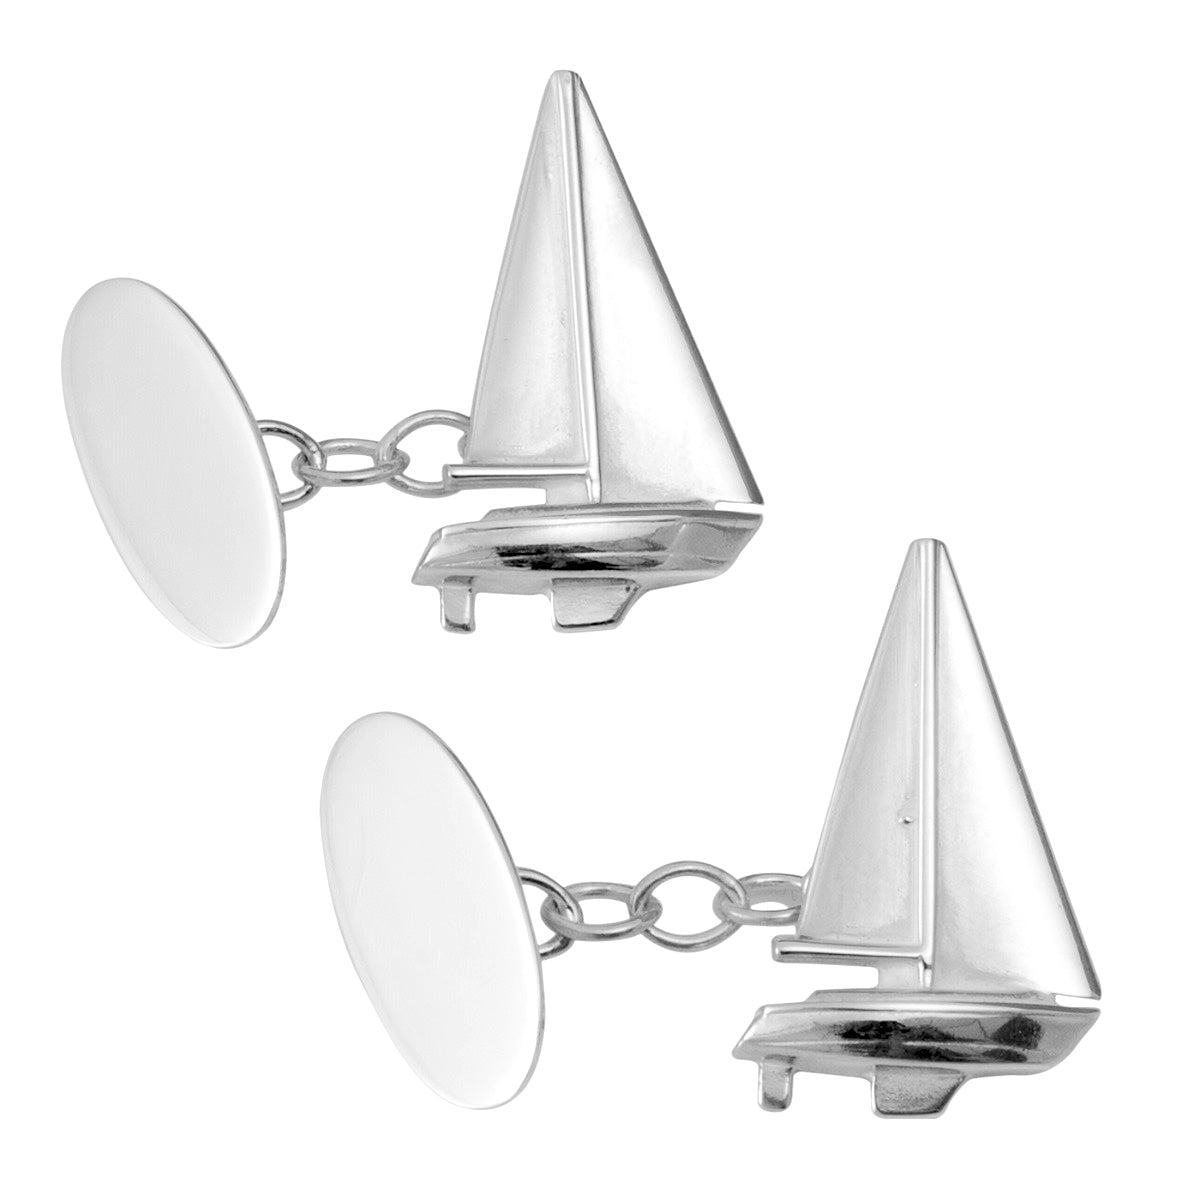 Silver sailing boat cufflinks